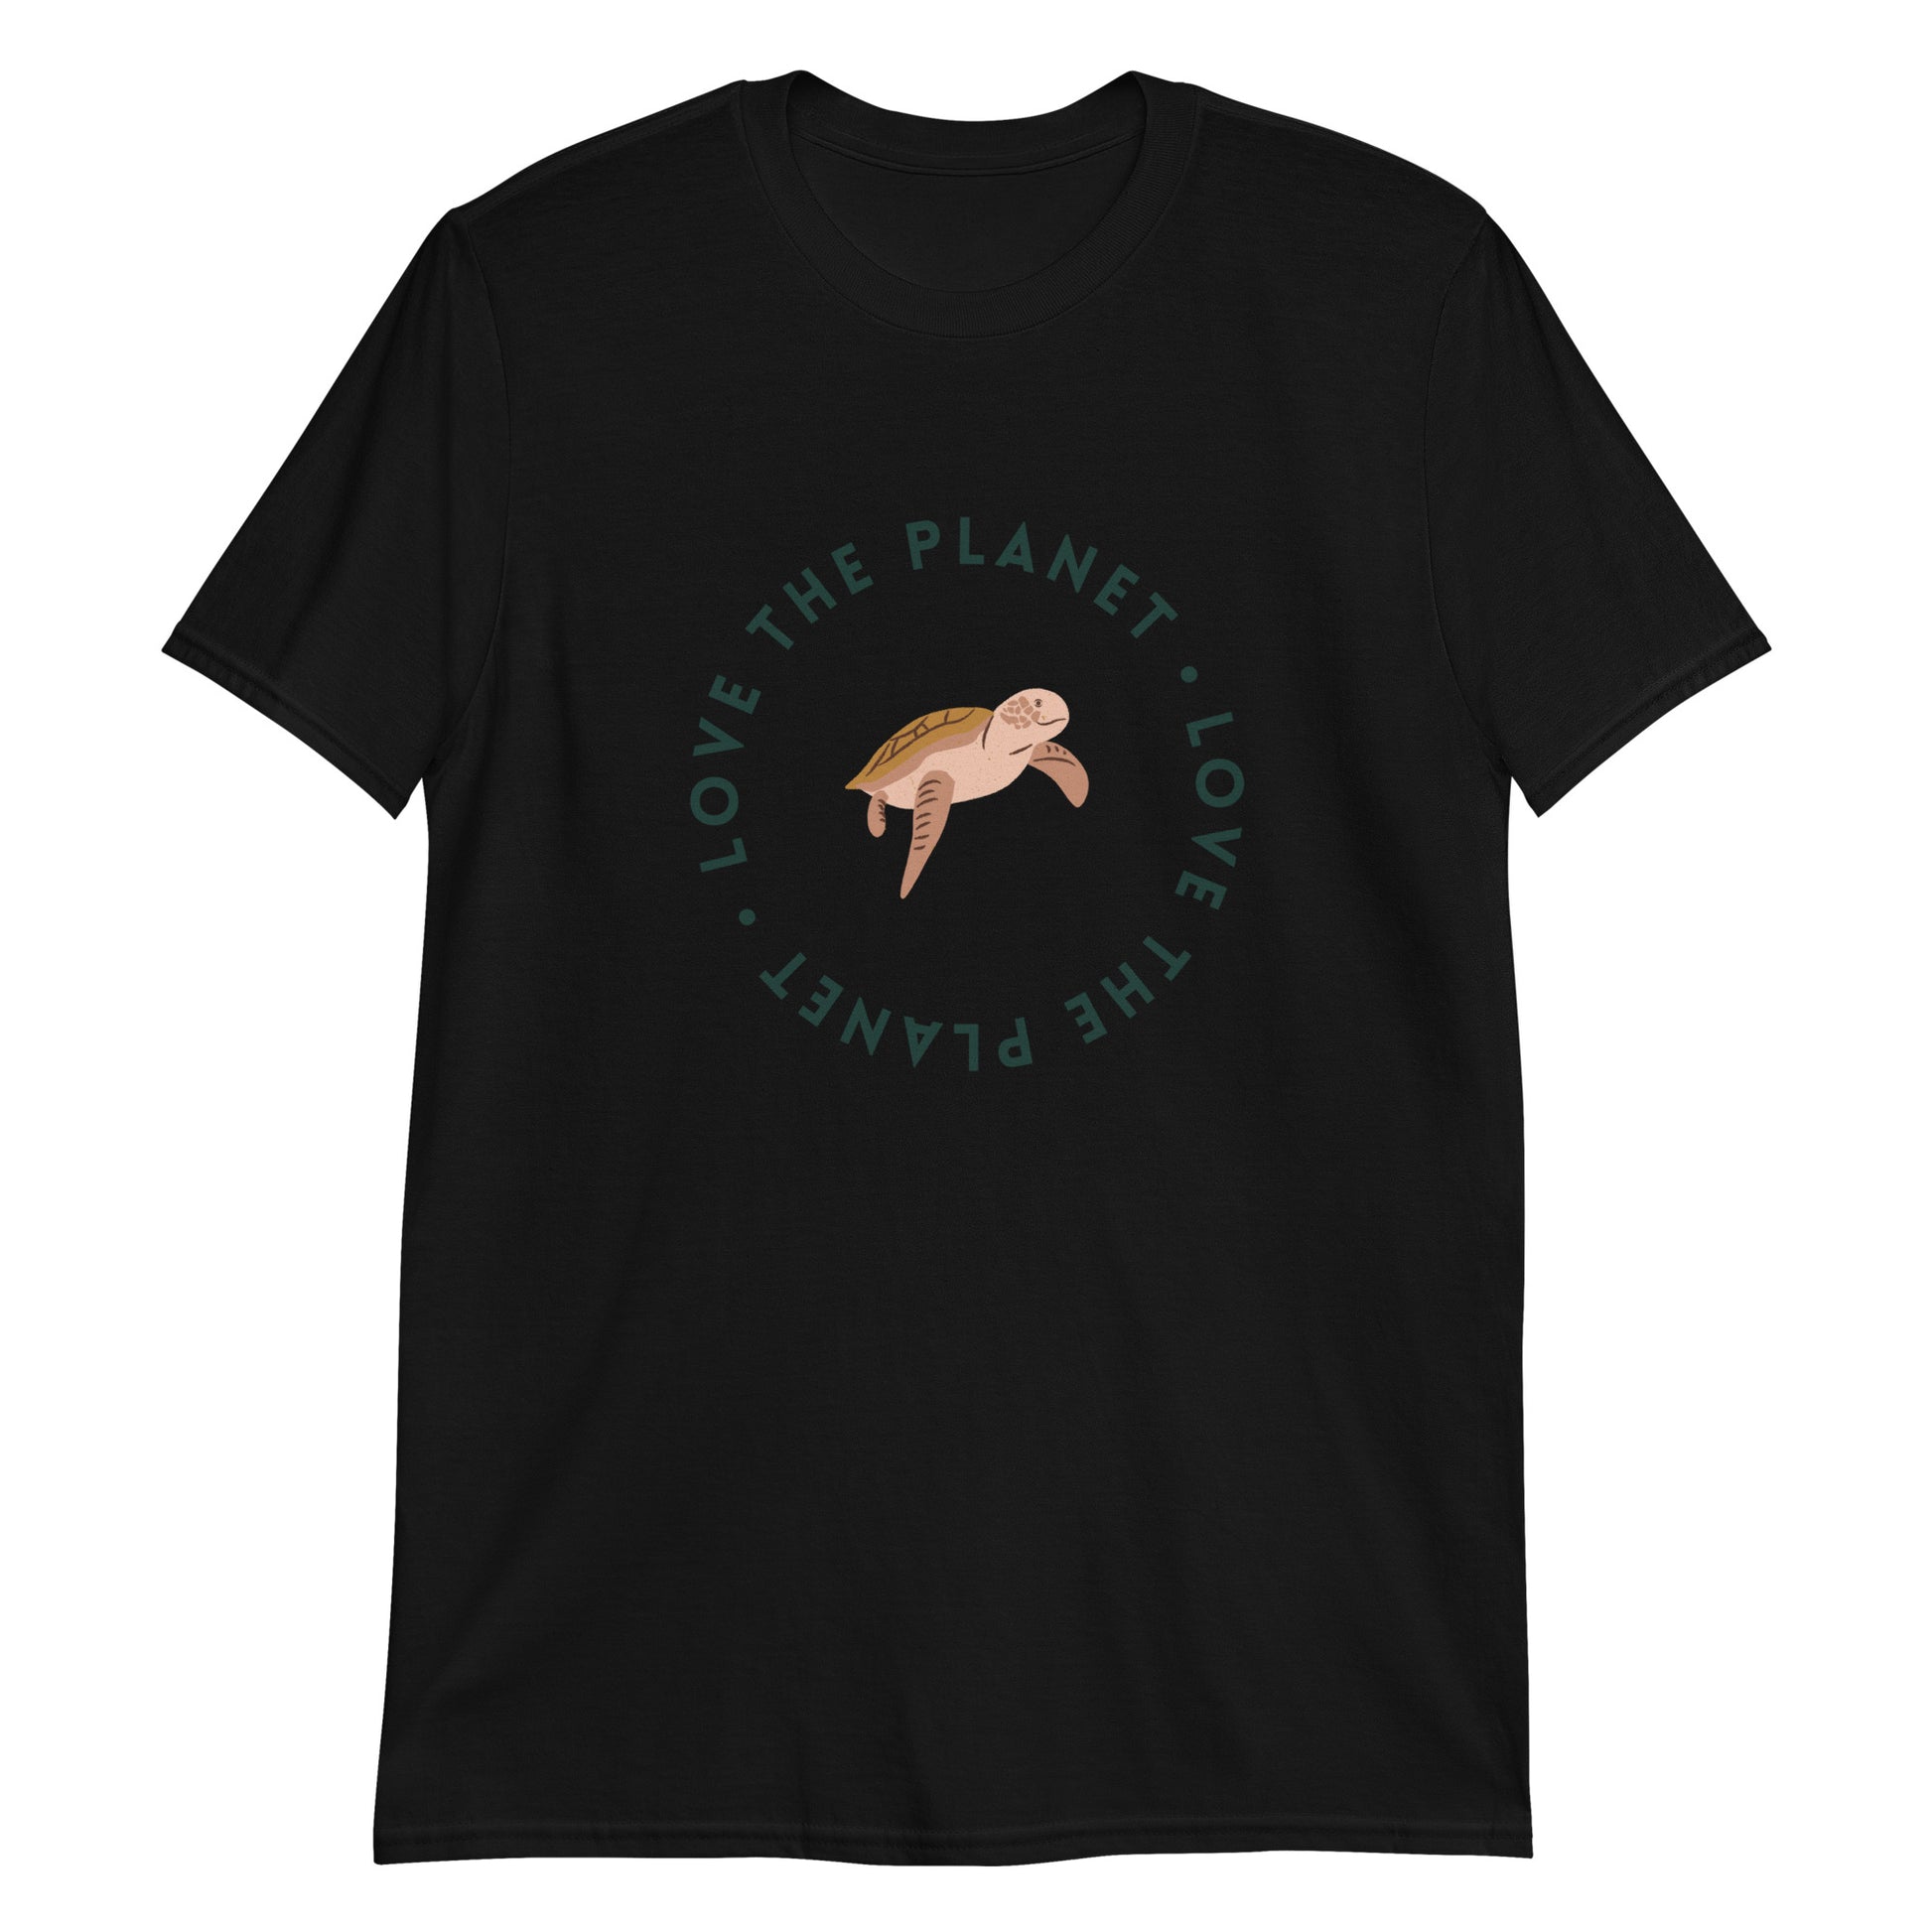 Love The Planet - Short-Sleeve Unisex T-Shirt Black Unisex T-shirt Animal